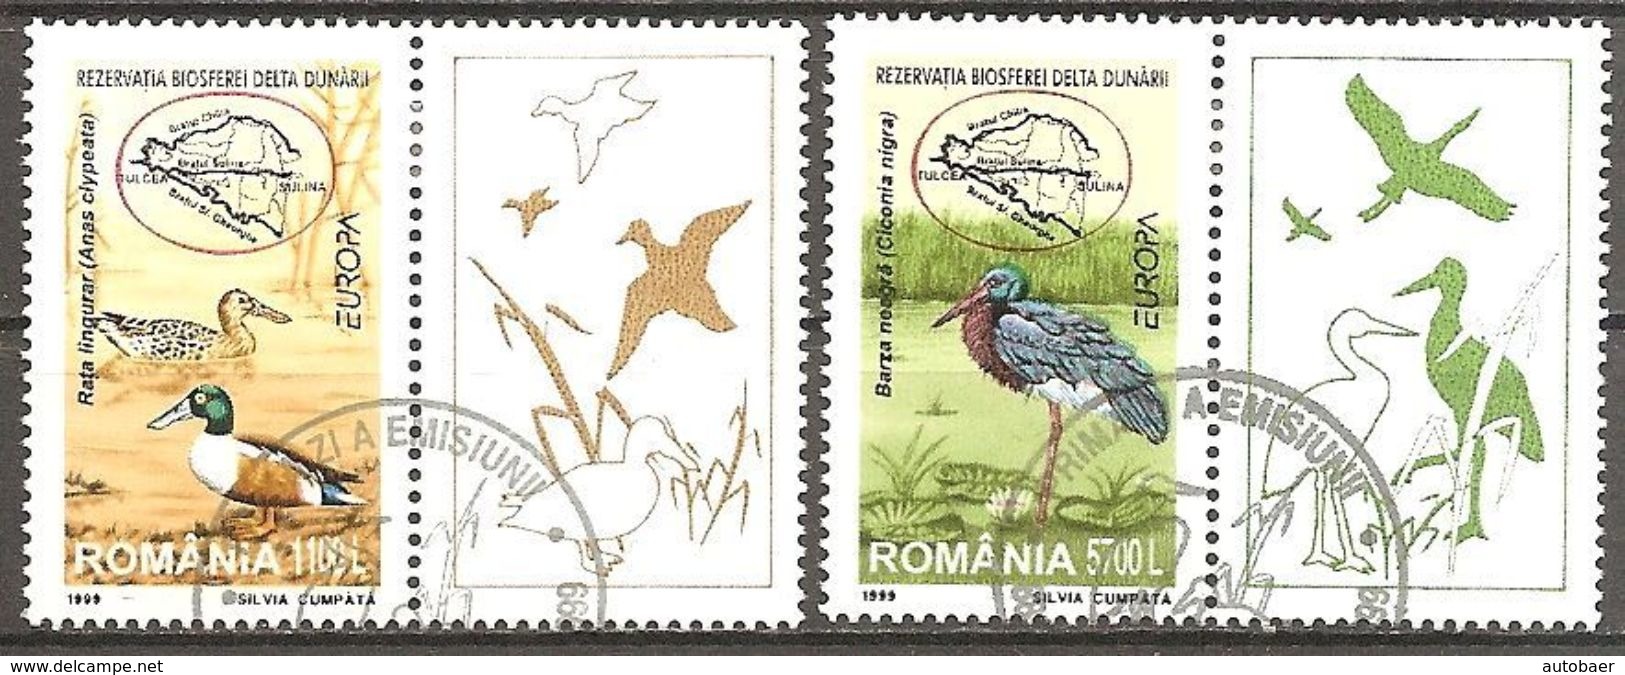 Romania Rumänien 1999 Europa Cept Michel 5414-15 Zierfeld Vignette Label Used Oblitéré Gestempelt Cancelled Oo - 1999